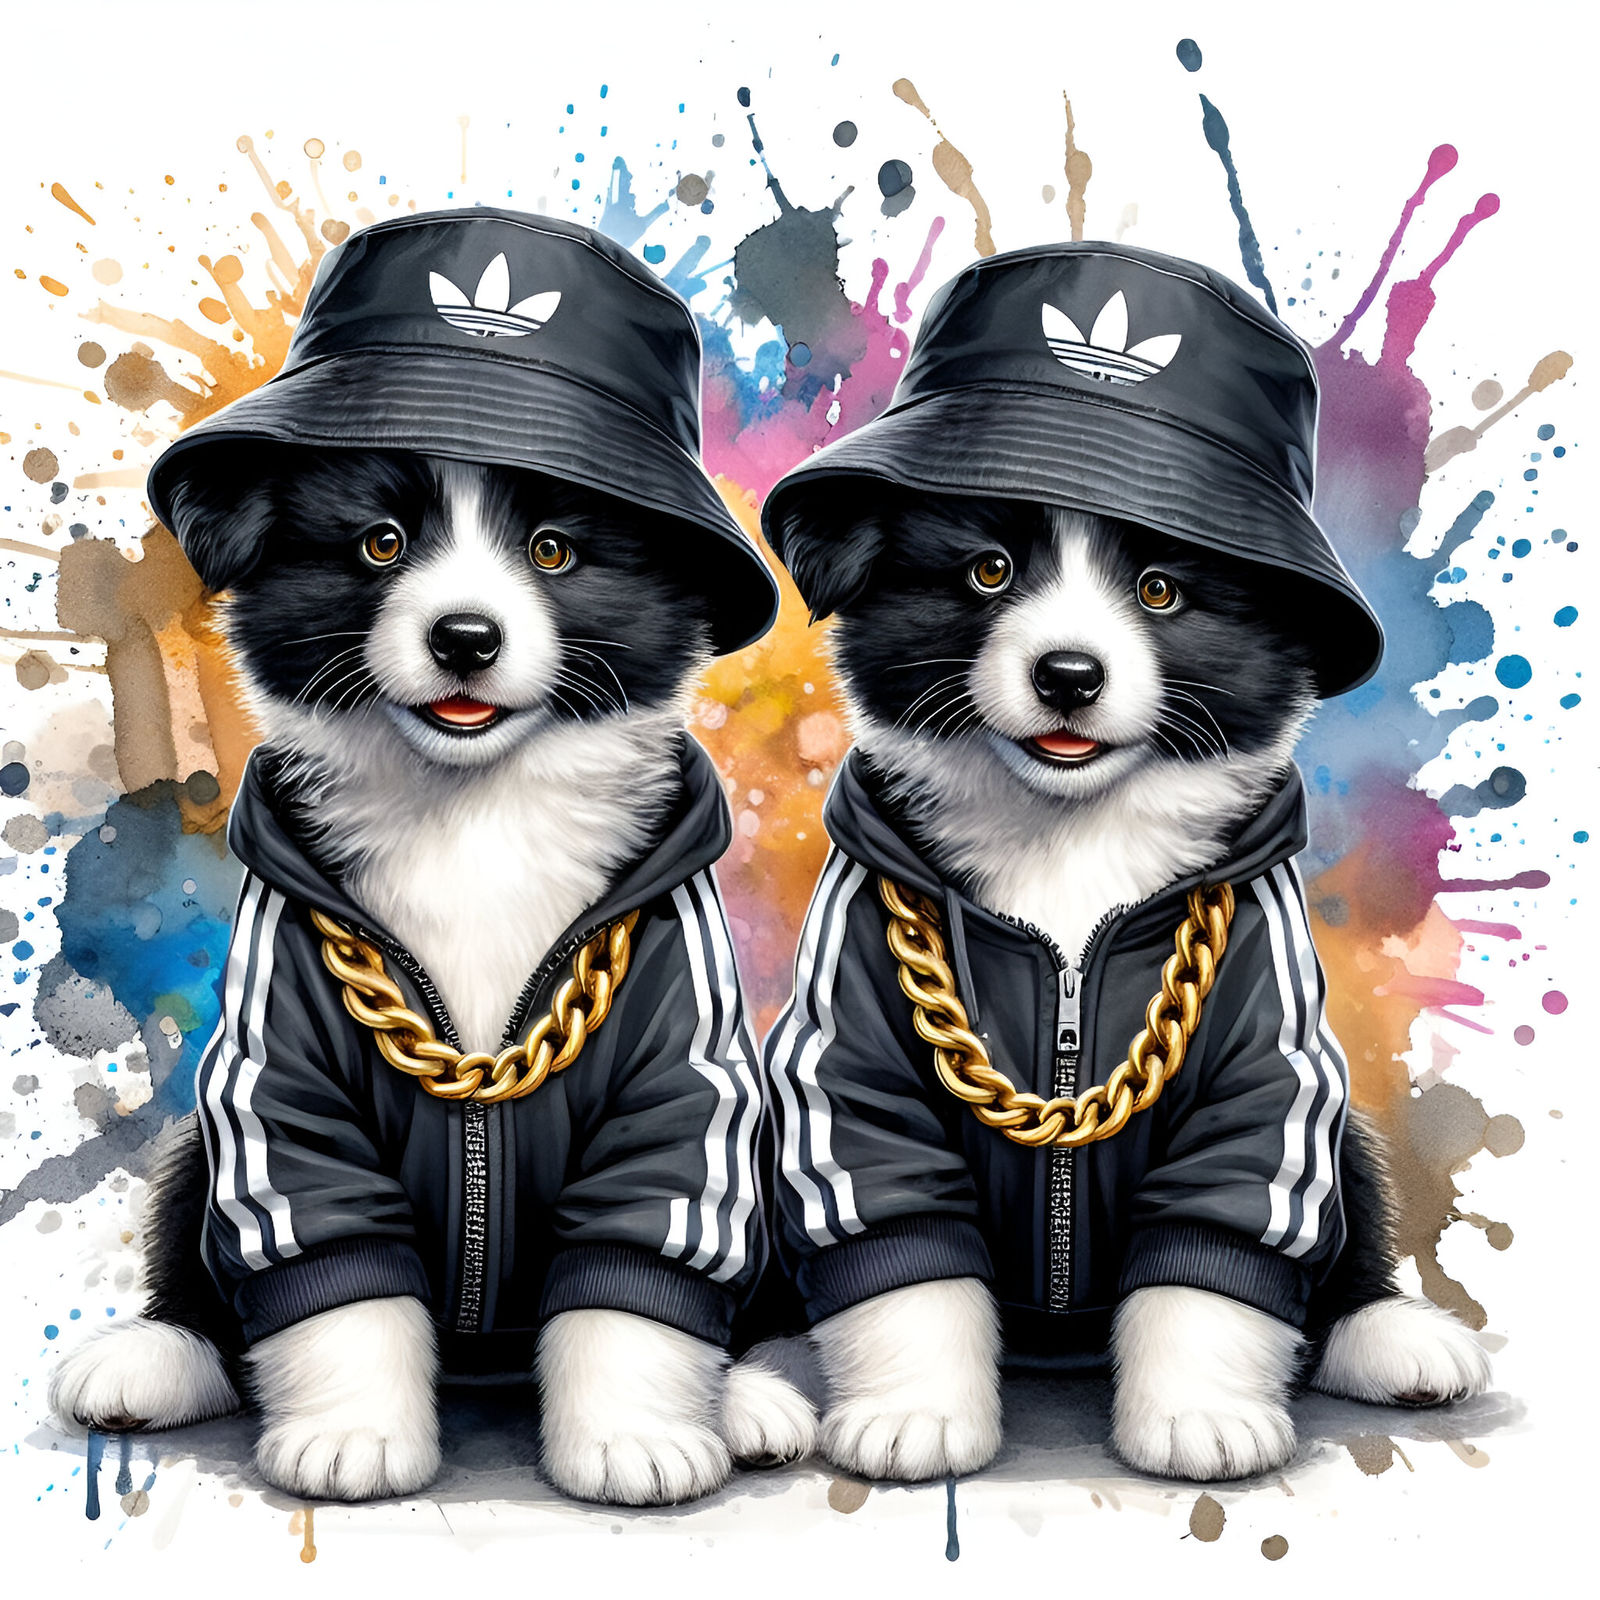 Cute 80's Run-DMC puppies